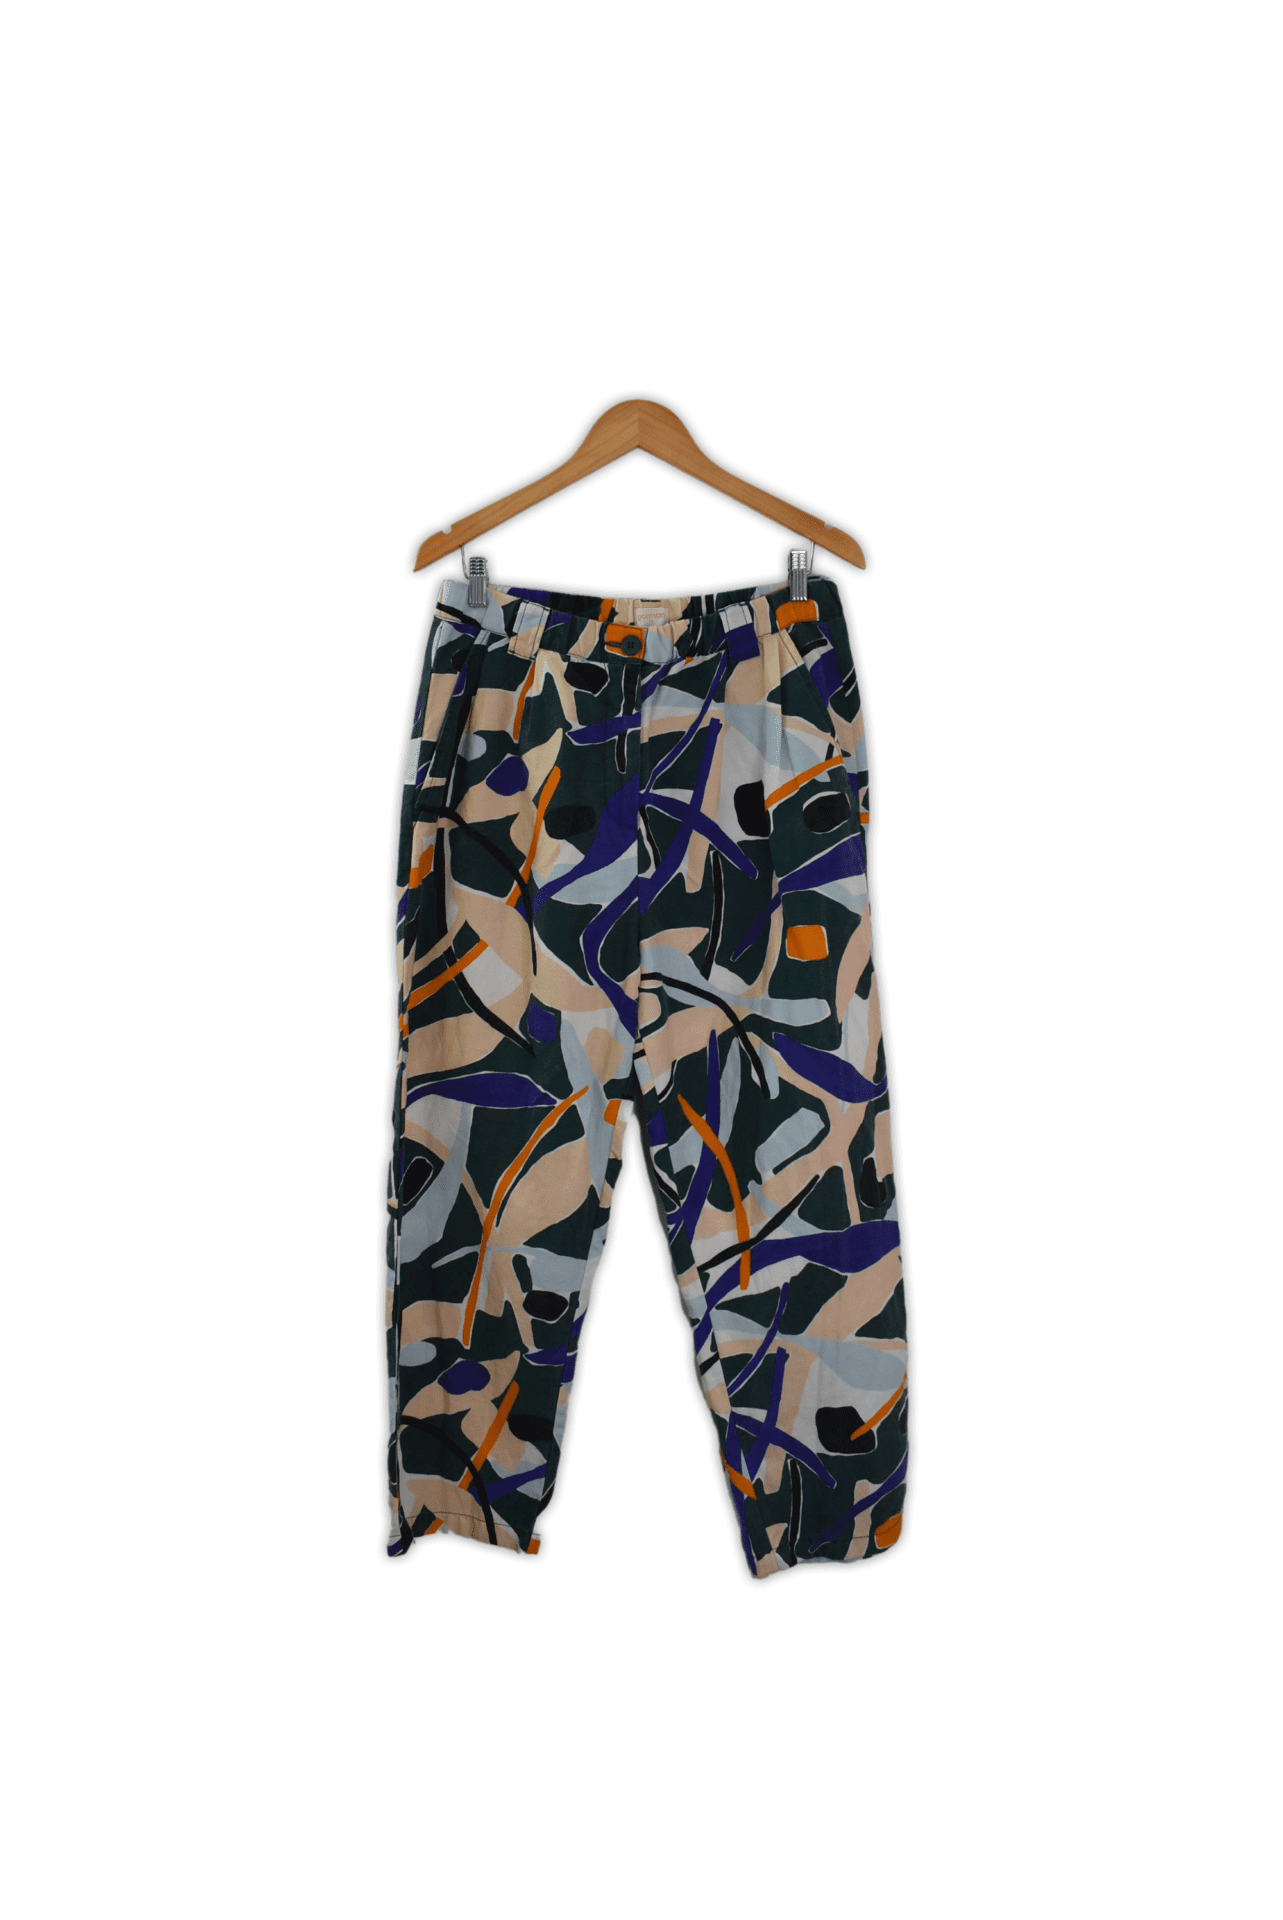 Medium, blue, purple, green and orange patterned soft tailored pants